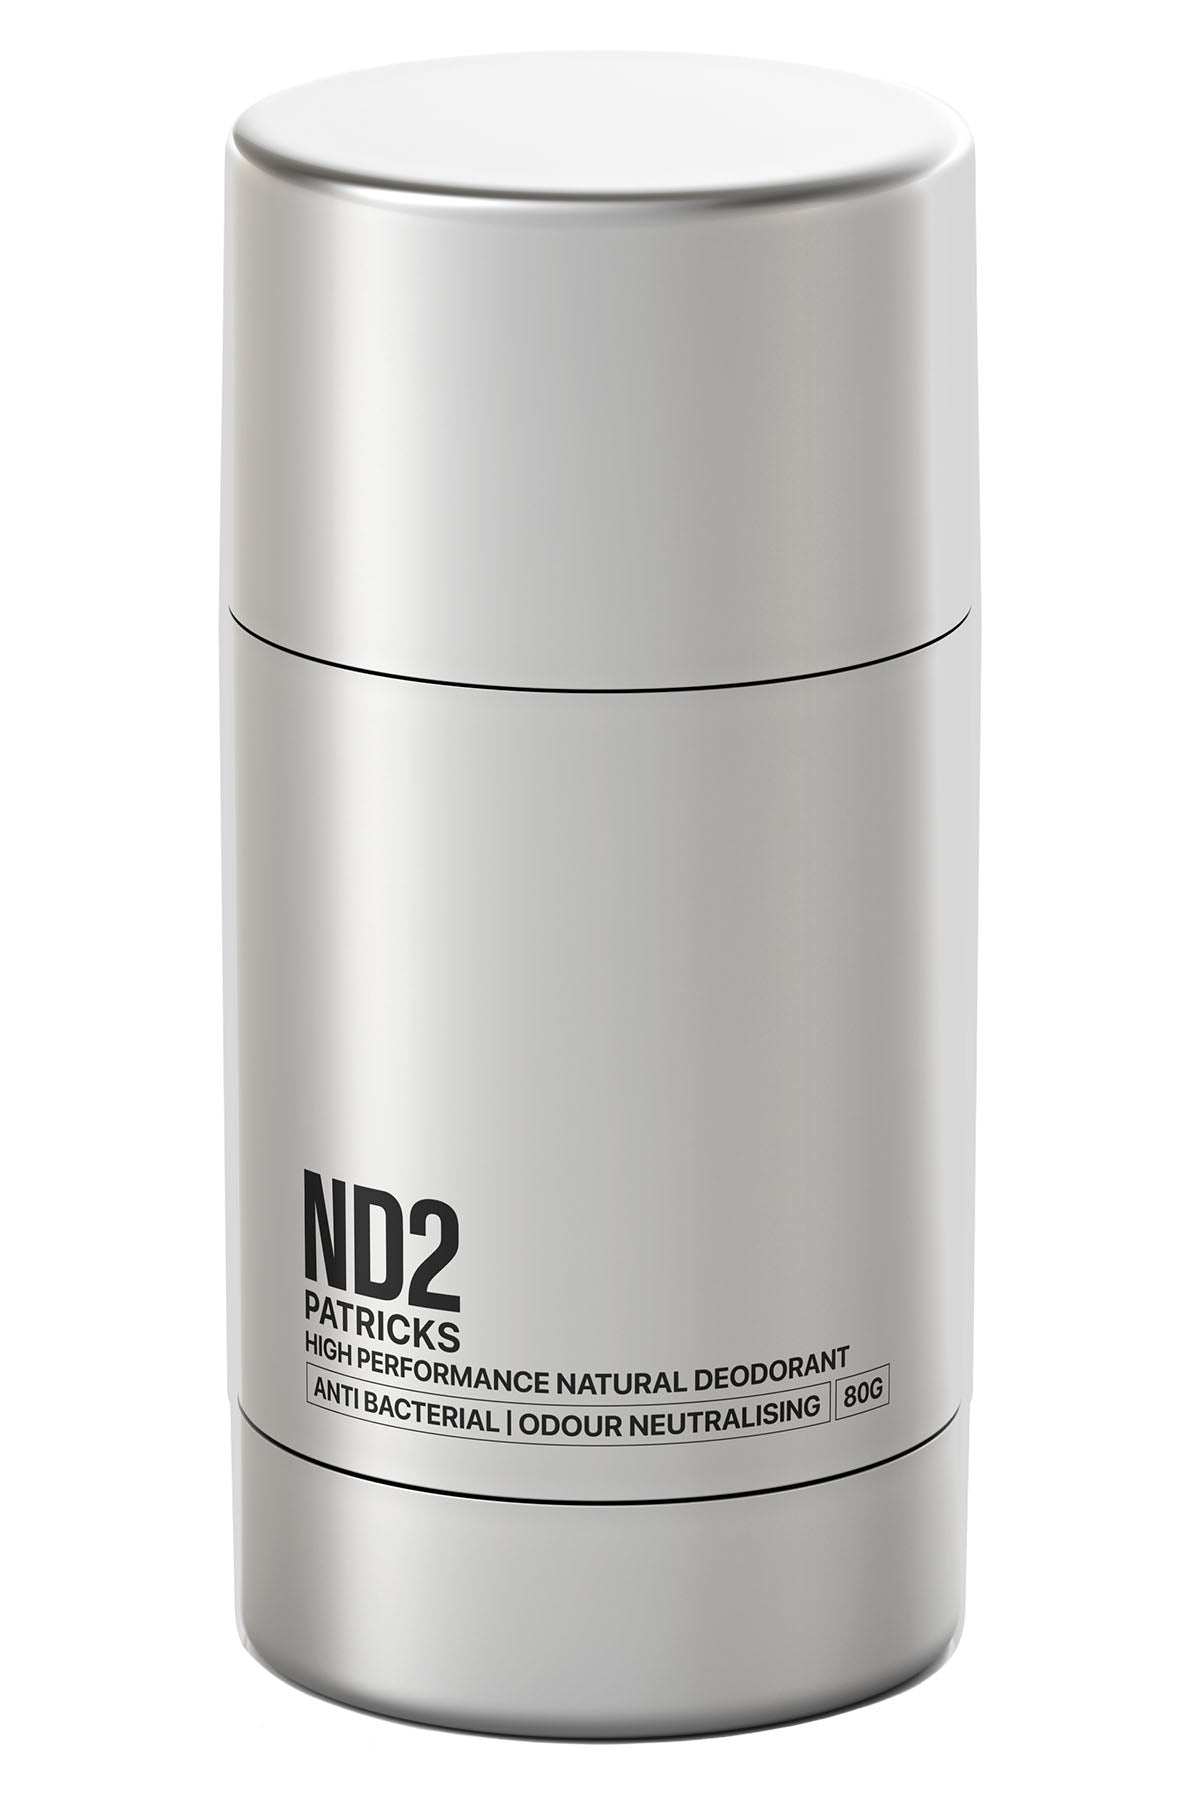 Patricks ND2 High Performance Natural Deodorant